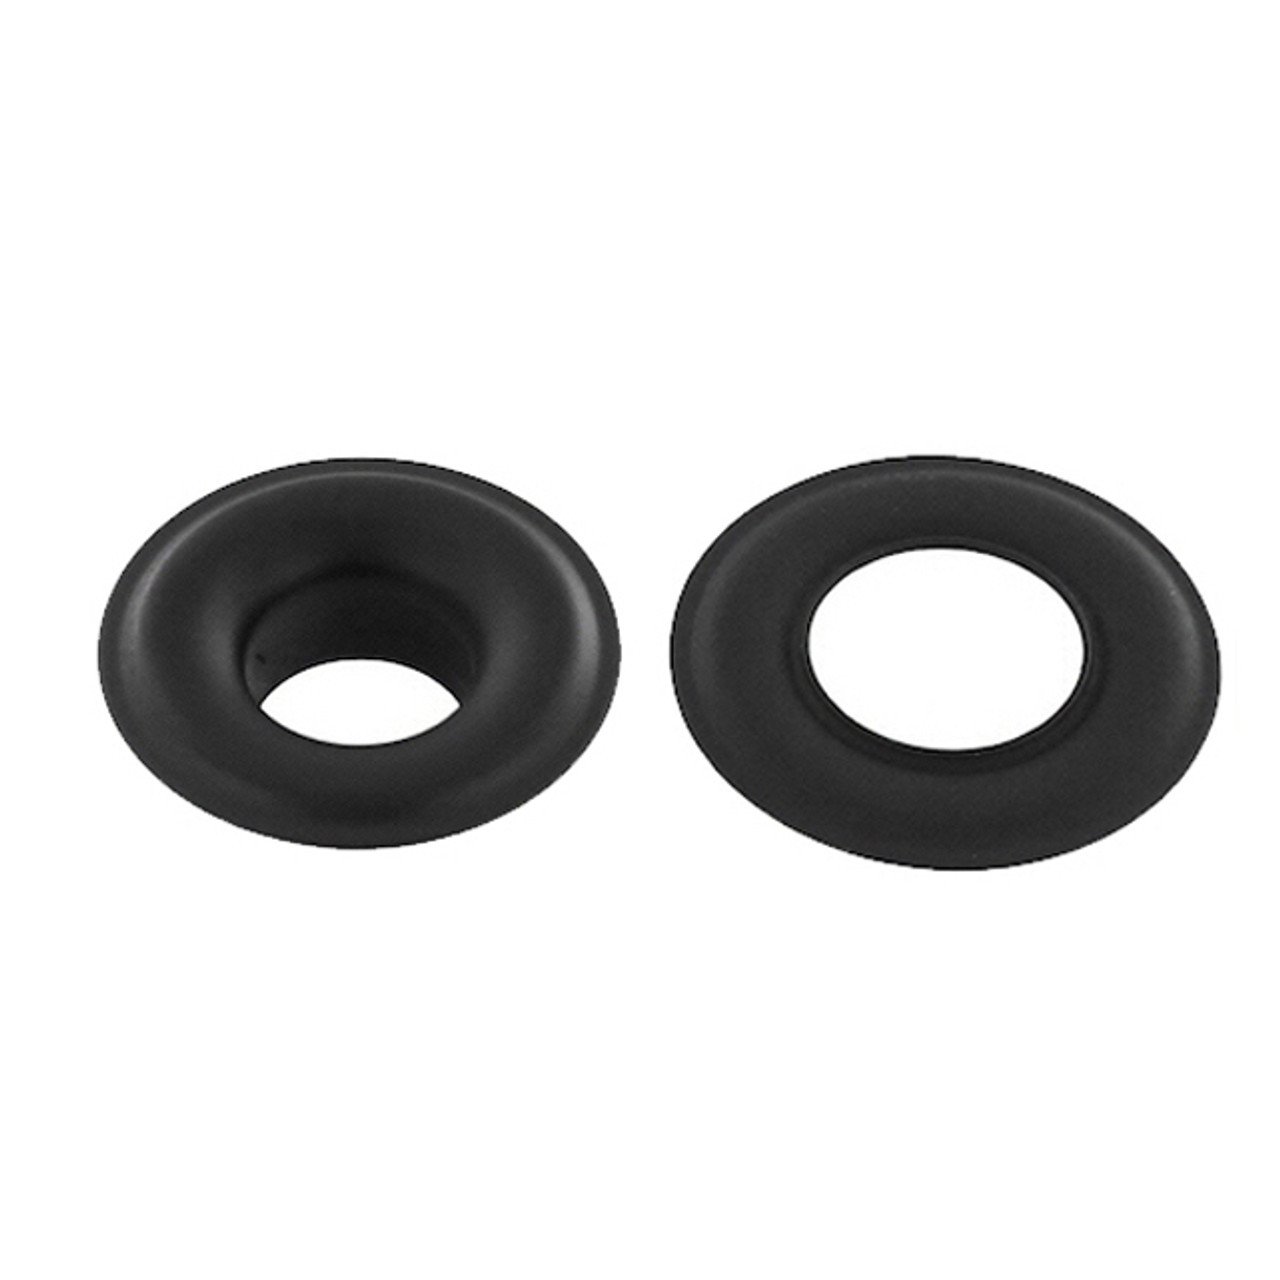 7 mm KAM® Metal Grommets/Eyelets – I Like Big Buttons!